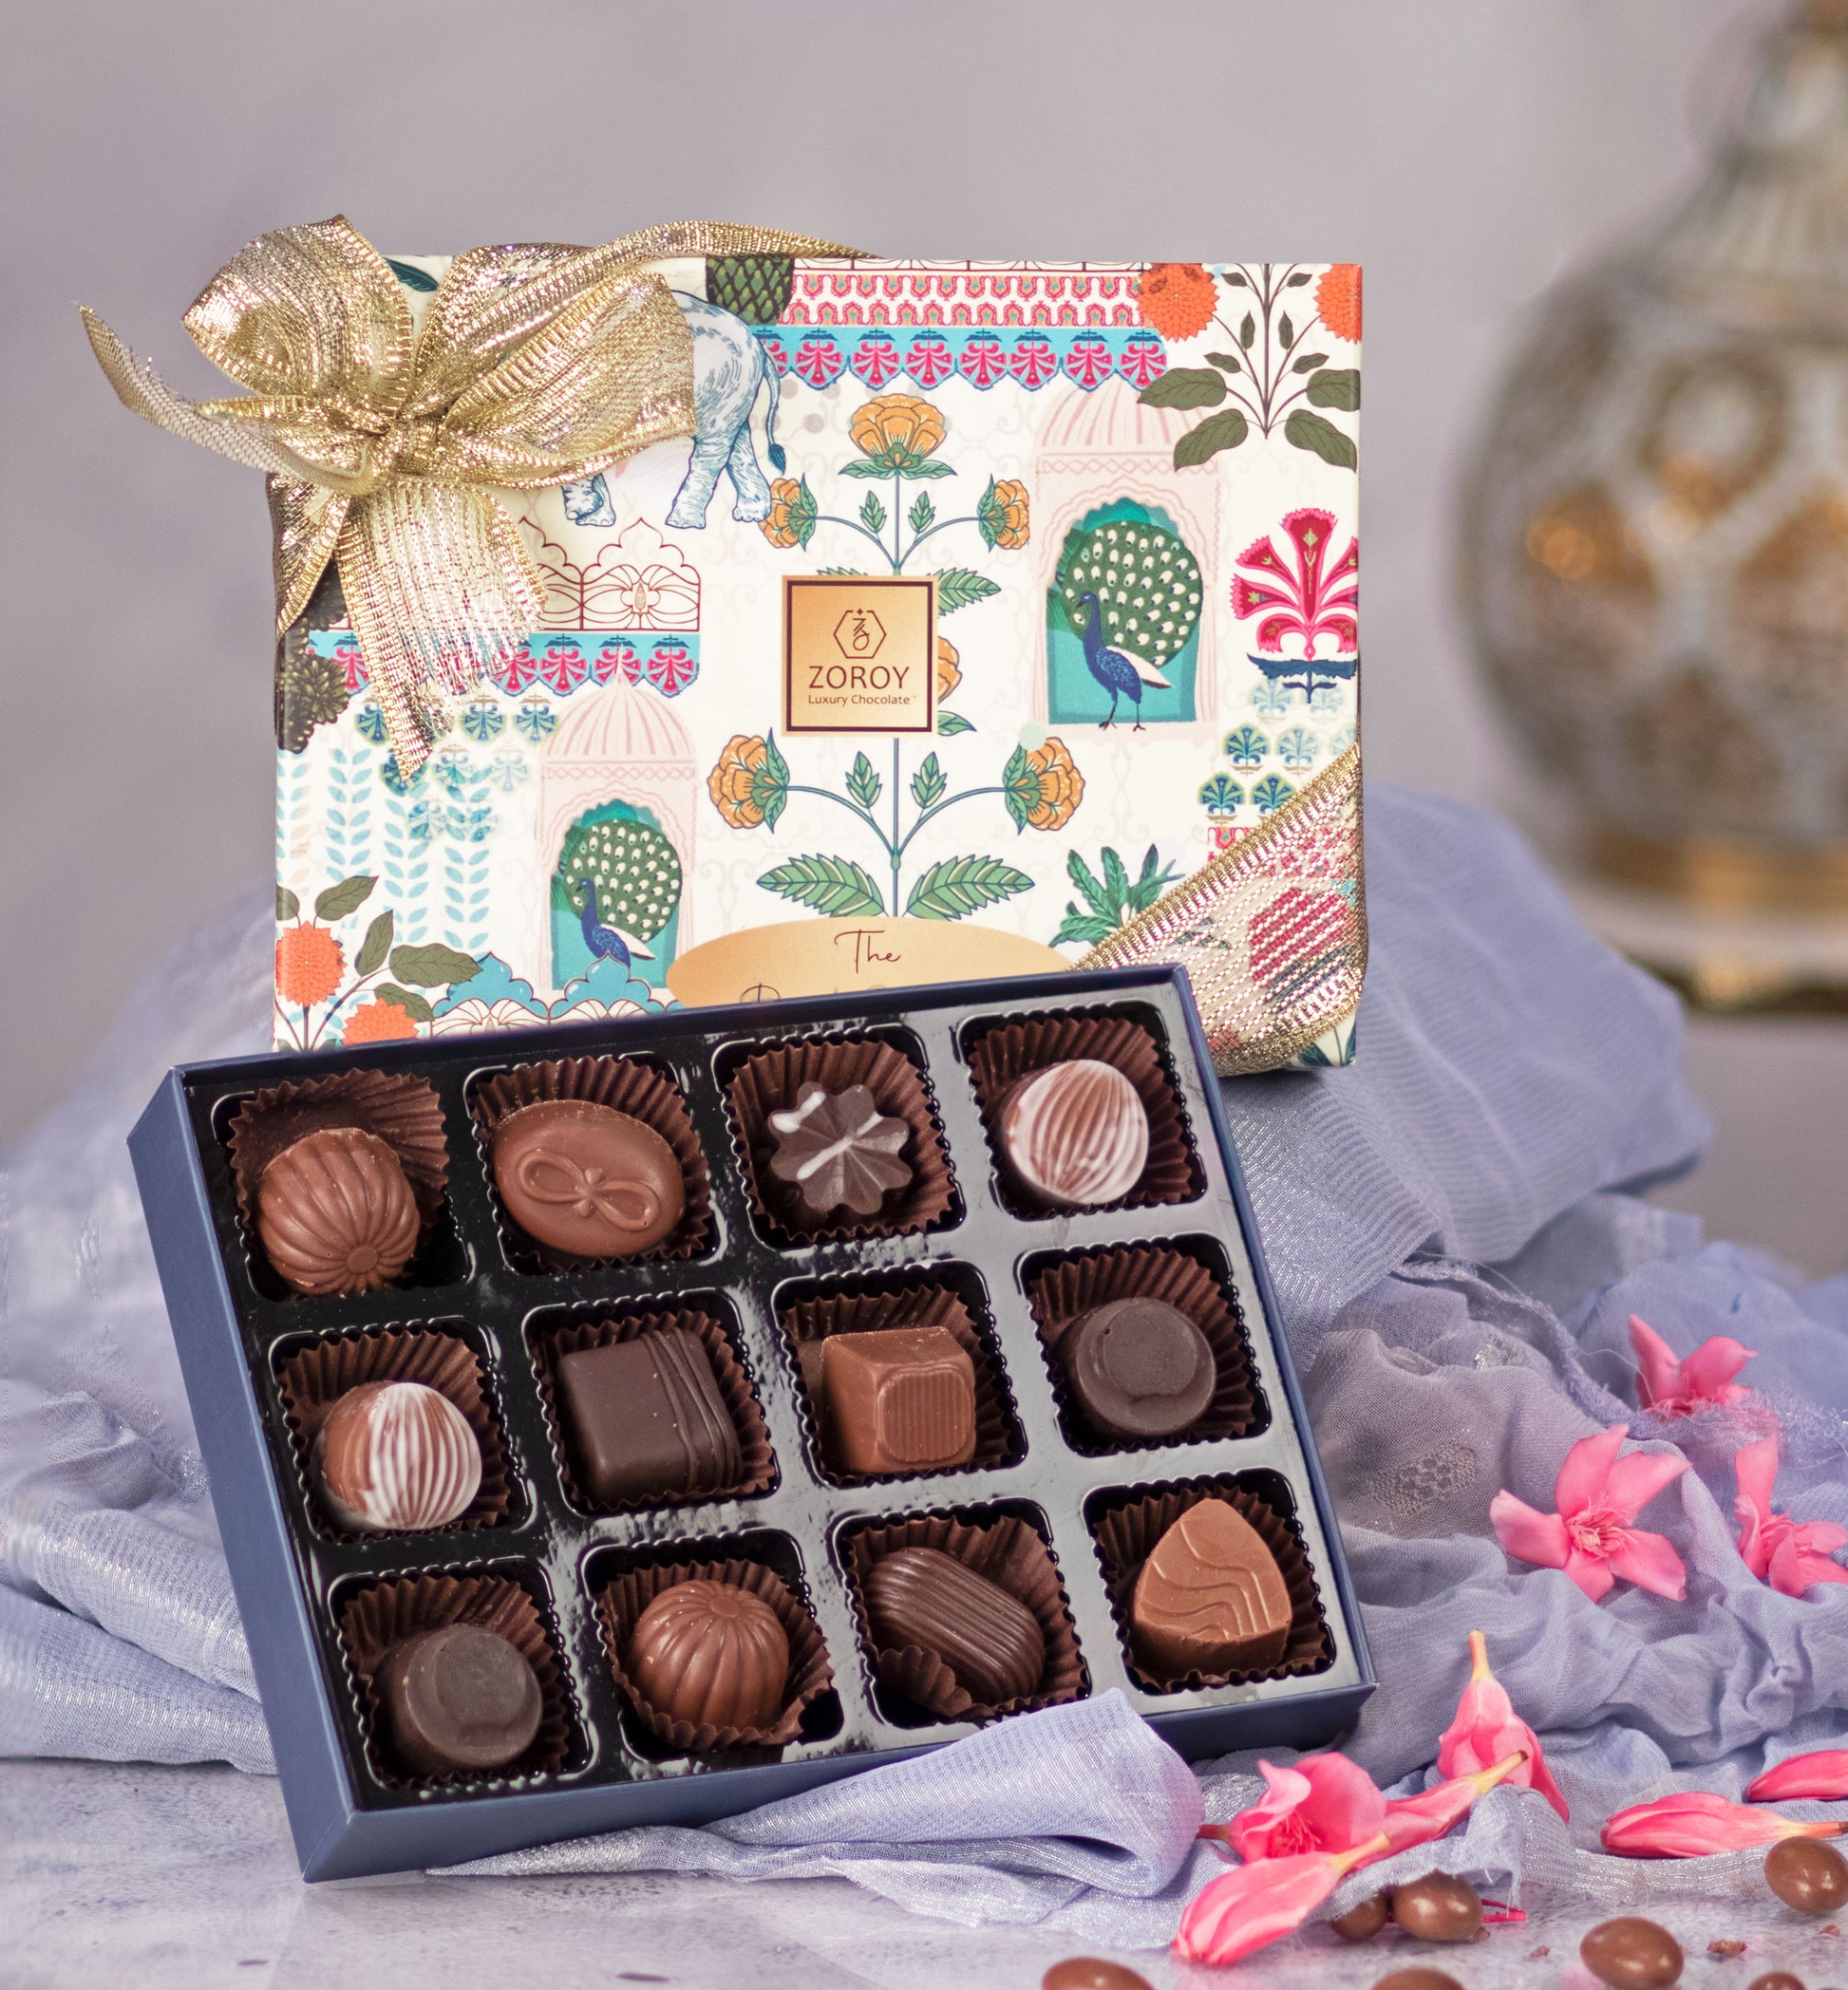 ZOROY Diwali Festive Box of 12 Assorted Chocolate